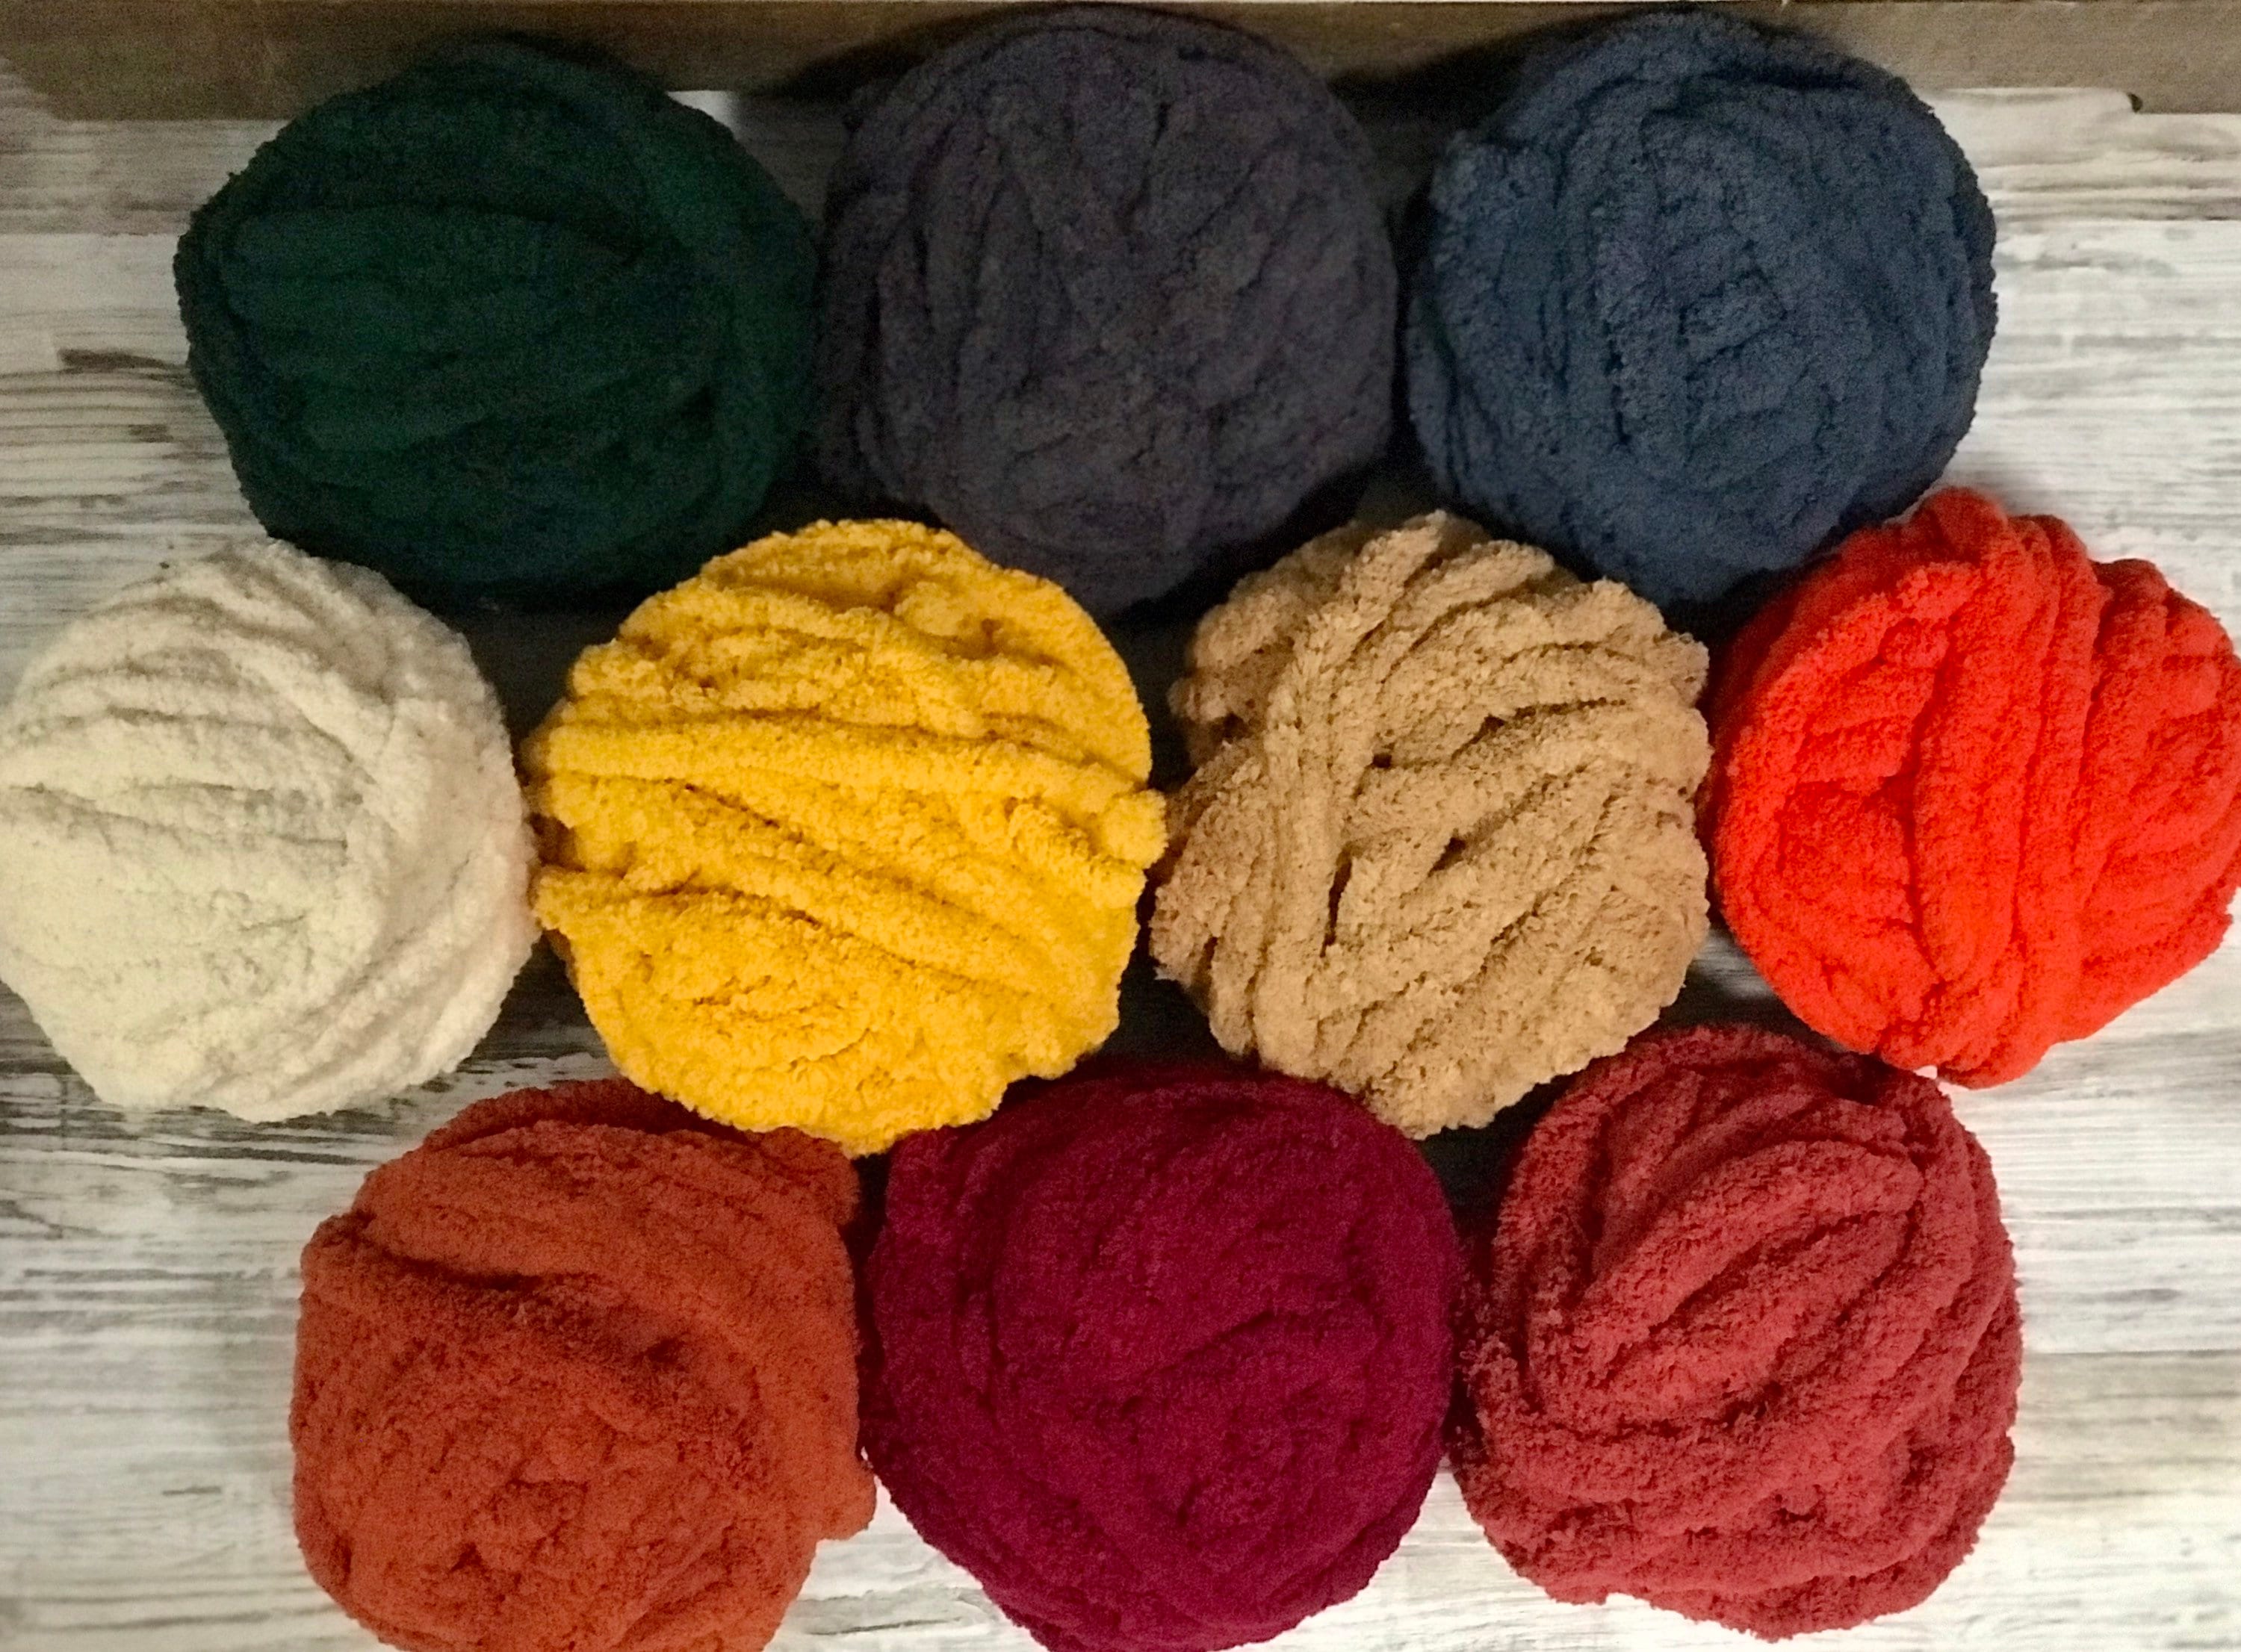 New Bernat Chunky Blanket Yarn Harvest 161110 Lot Of 2 Fall Autumn Knitting